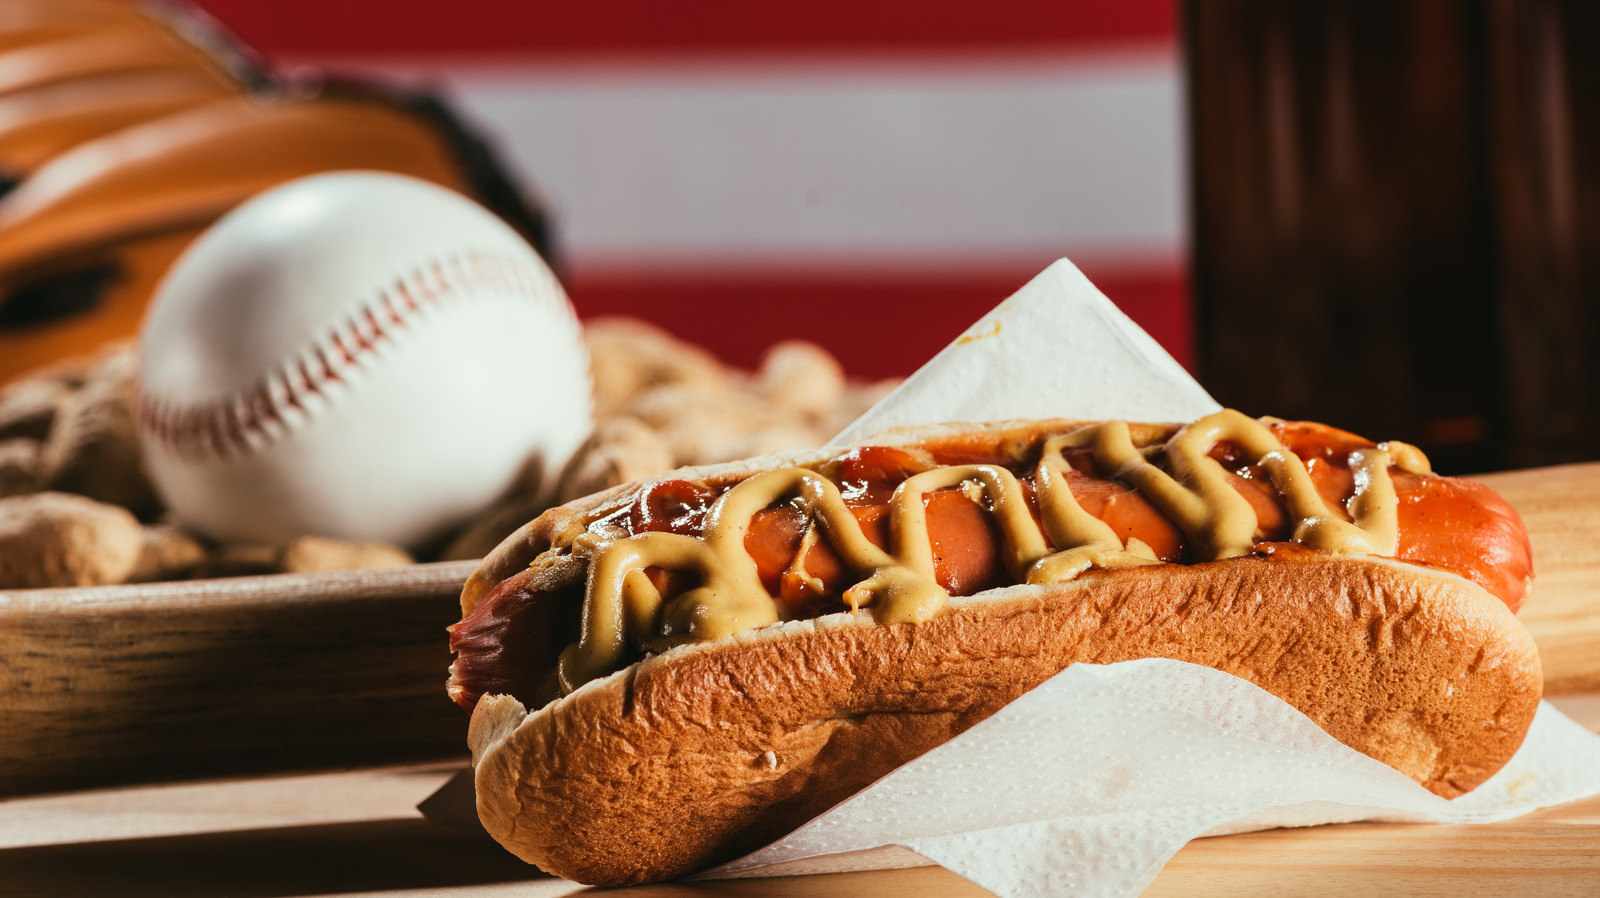 Best Ballpark Food at Citi Field and Yankee Stadium